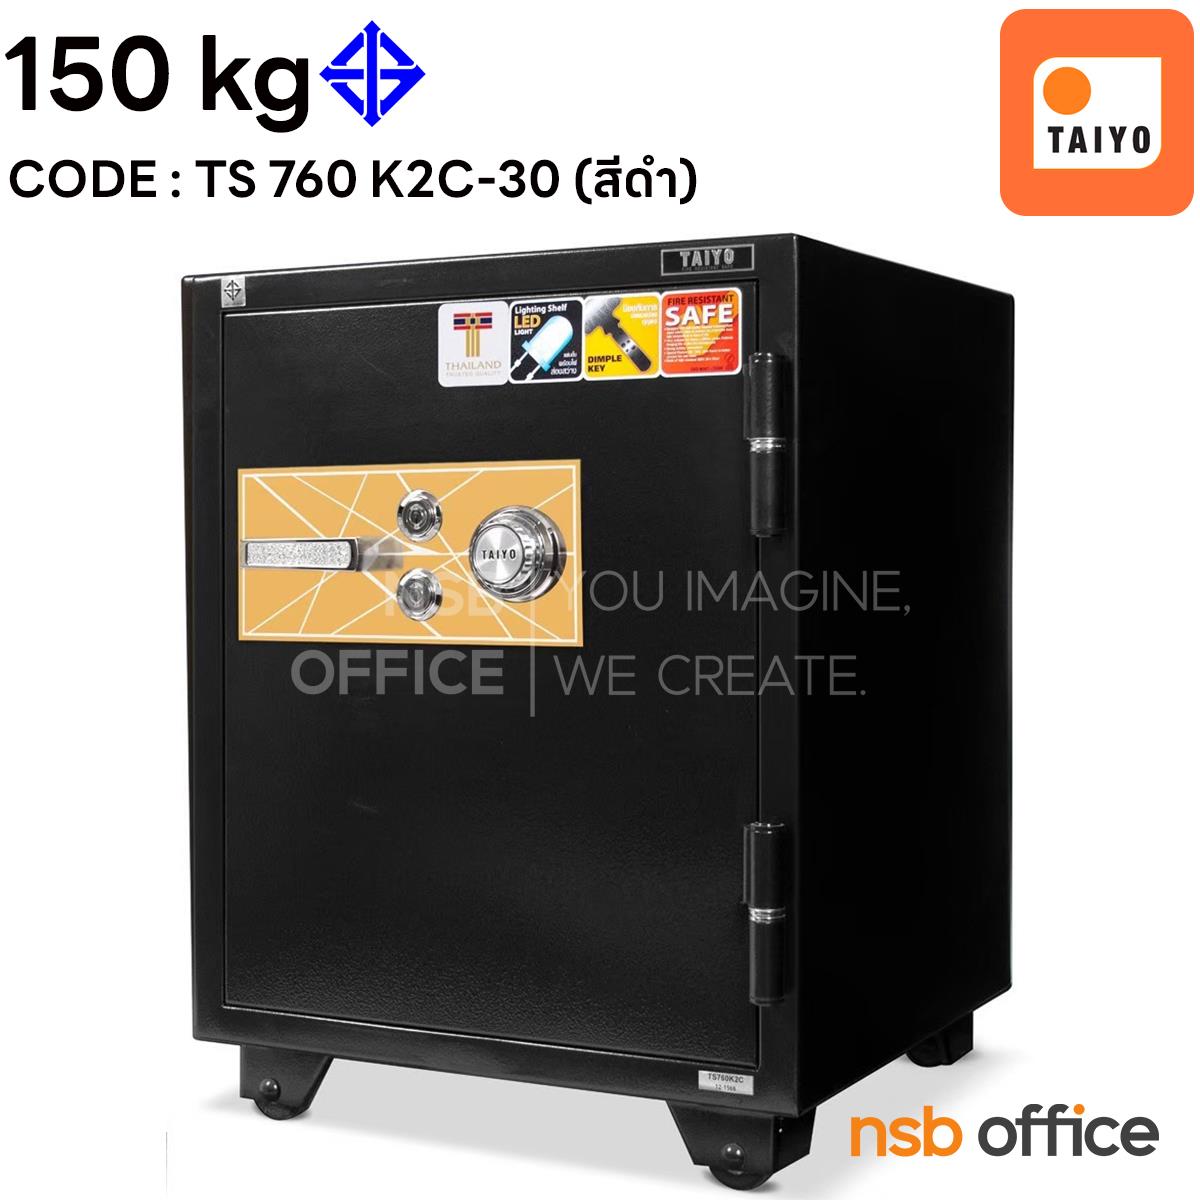 F01A058:ตู้เซฟ TAIYO 150 กก. 1 กุญแจ 1 รหัส (TS 760 K2C-30) สีดำ   